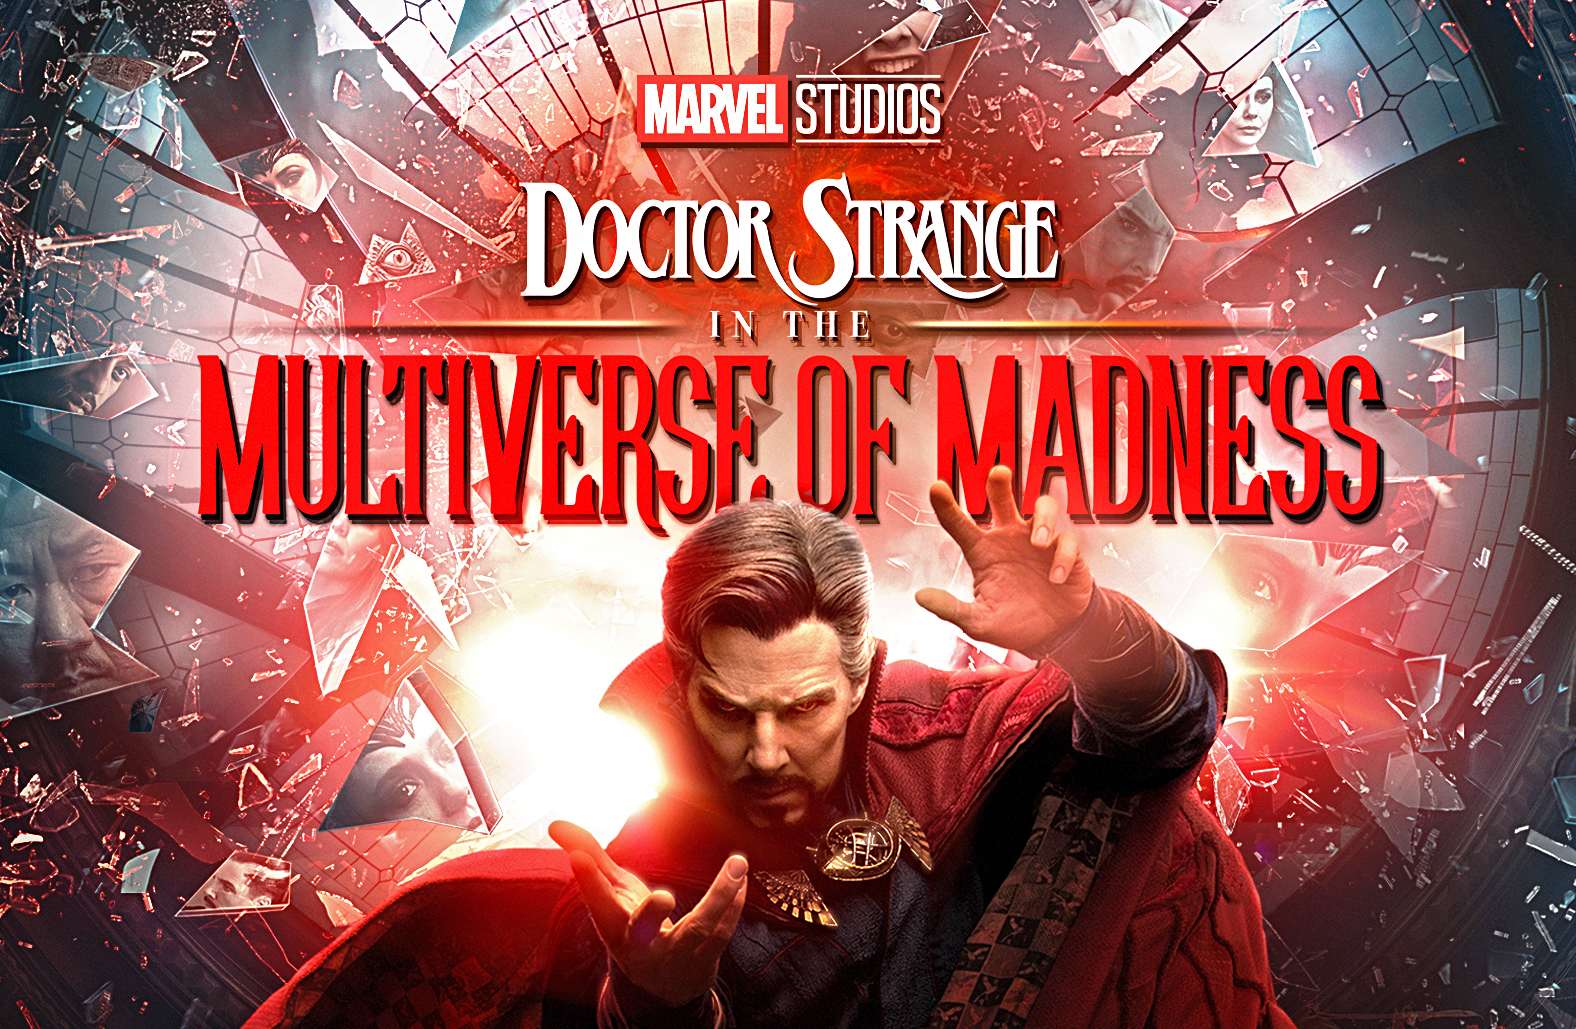 Sam Raimi Builds a Multiverse Across Mediums in Doctor Strange 2